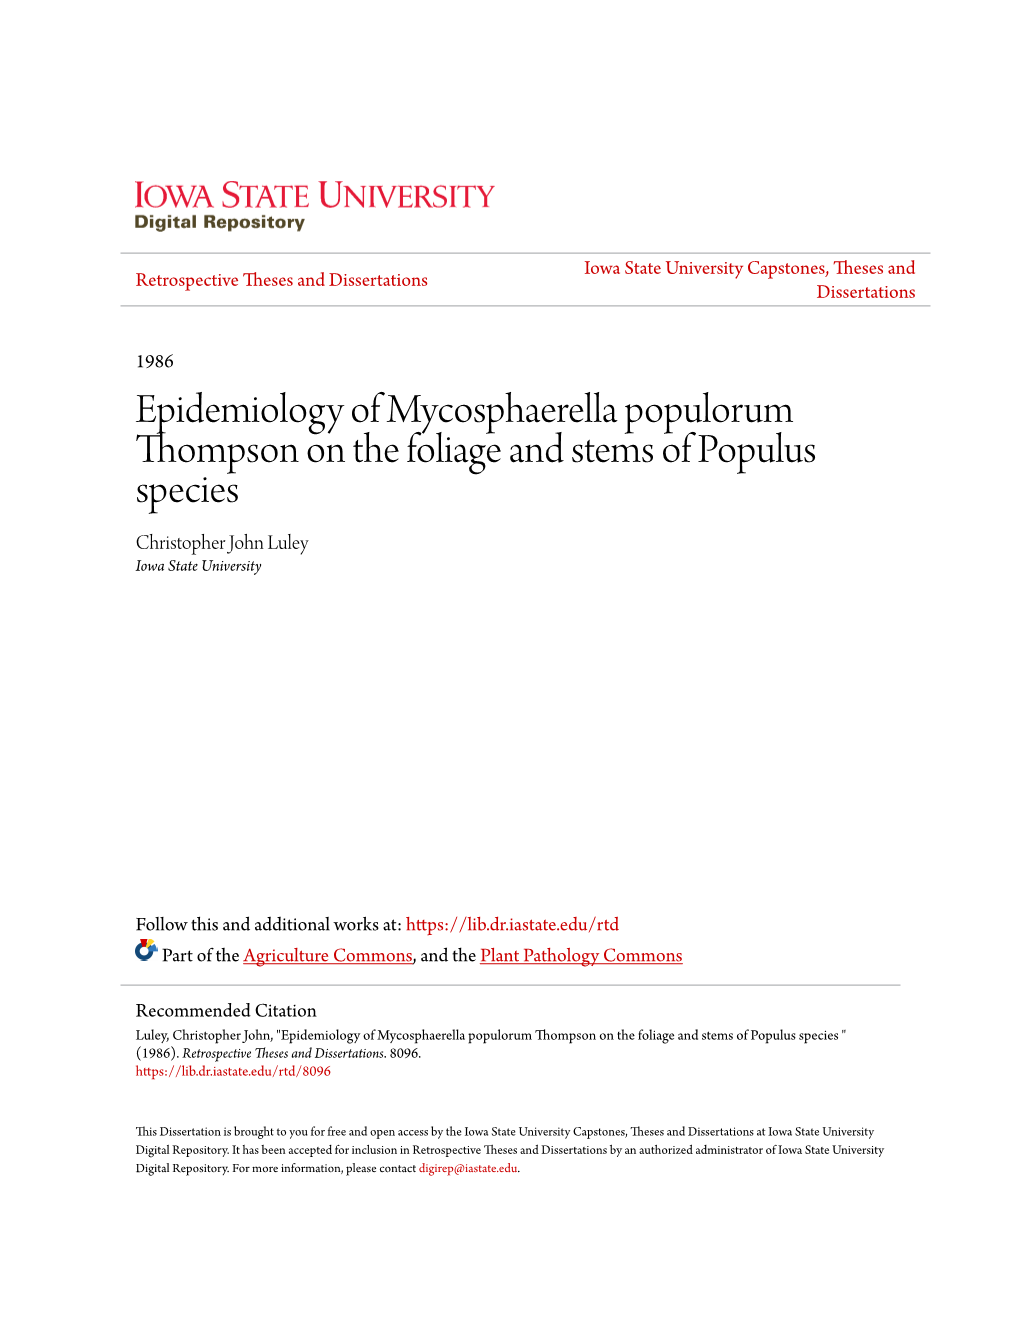 Epidemiology of Mycosphaerella Populorum Thompson on the Foliage and Stems of Populus Species Christopher John Luley Iowa State University